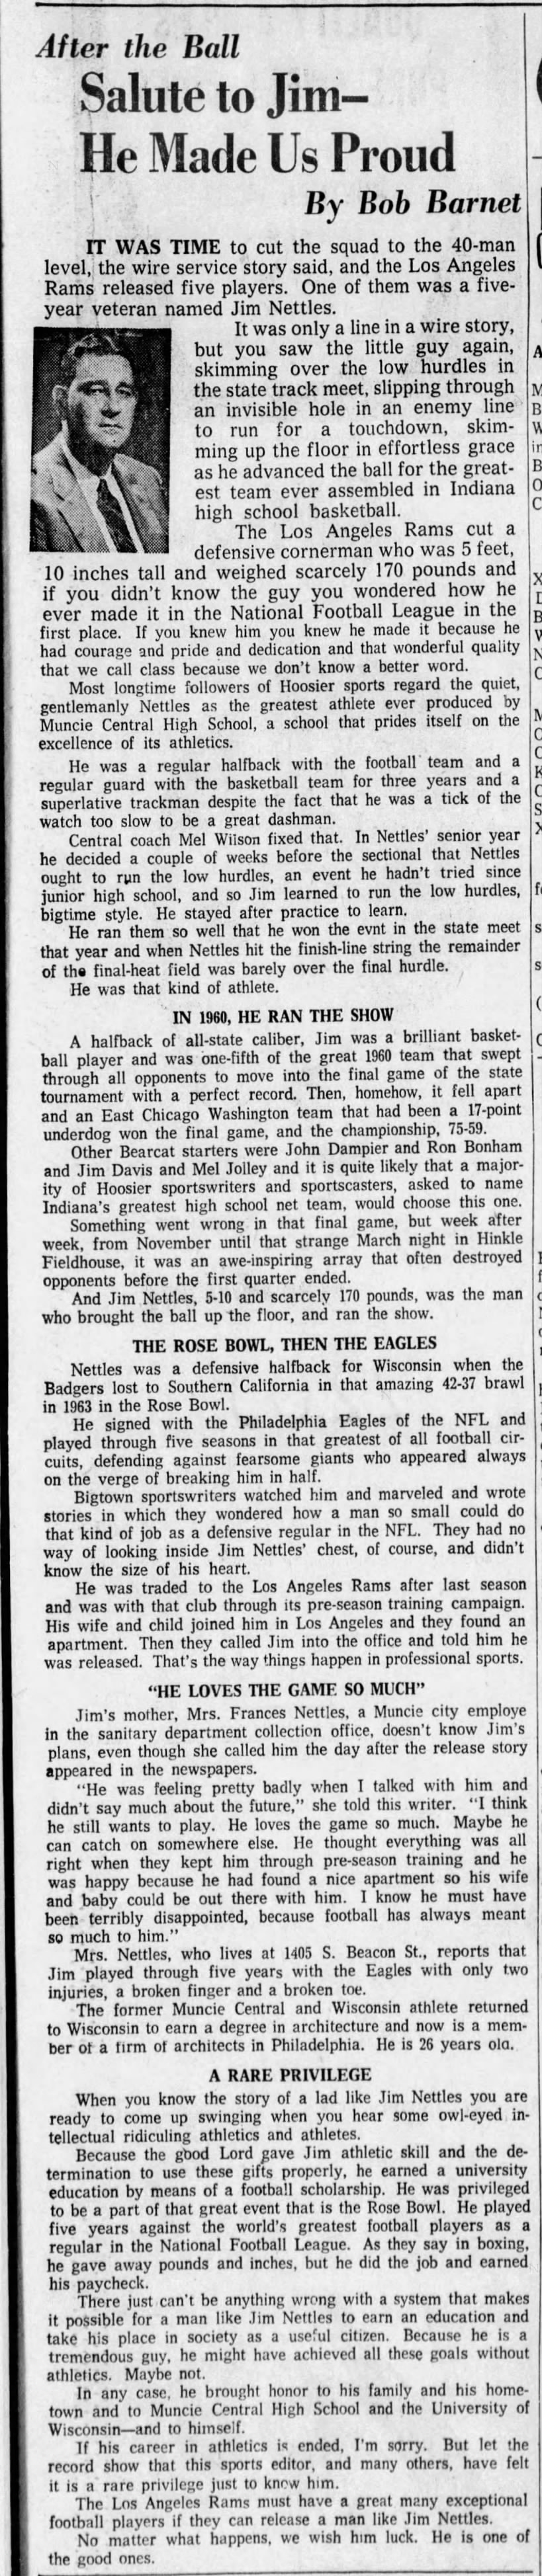 Long piece on Philadelphia Eagles cornerback Jim Nettles.